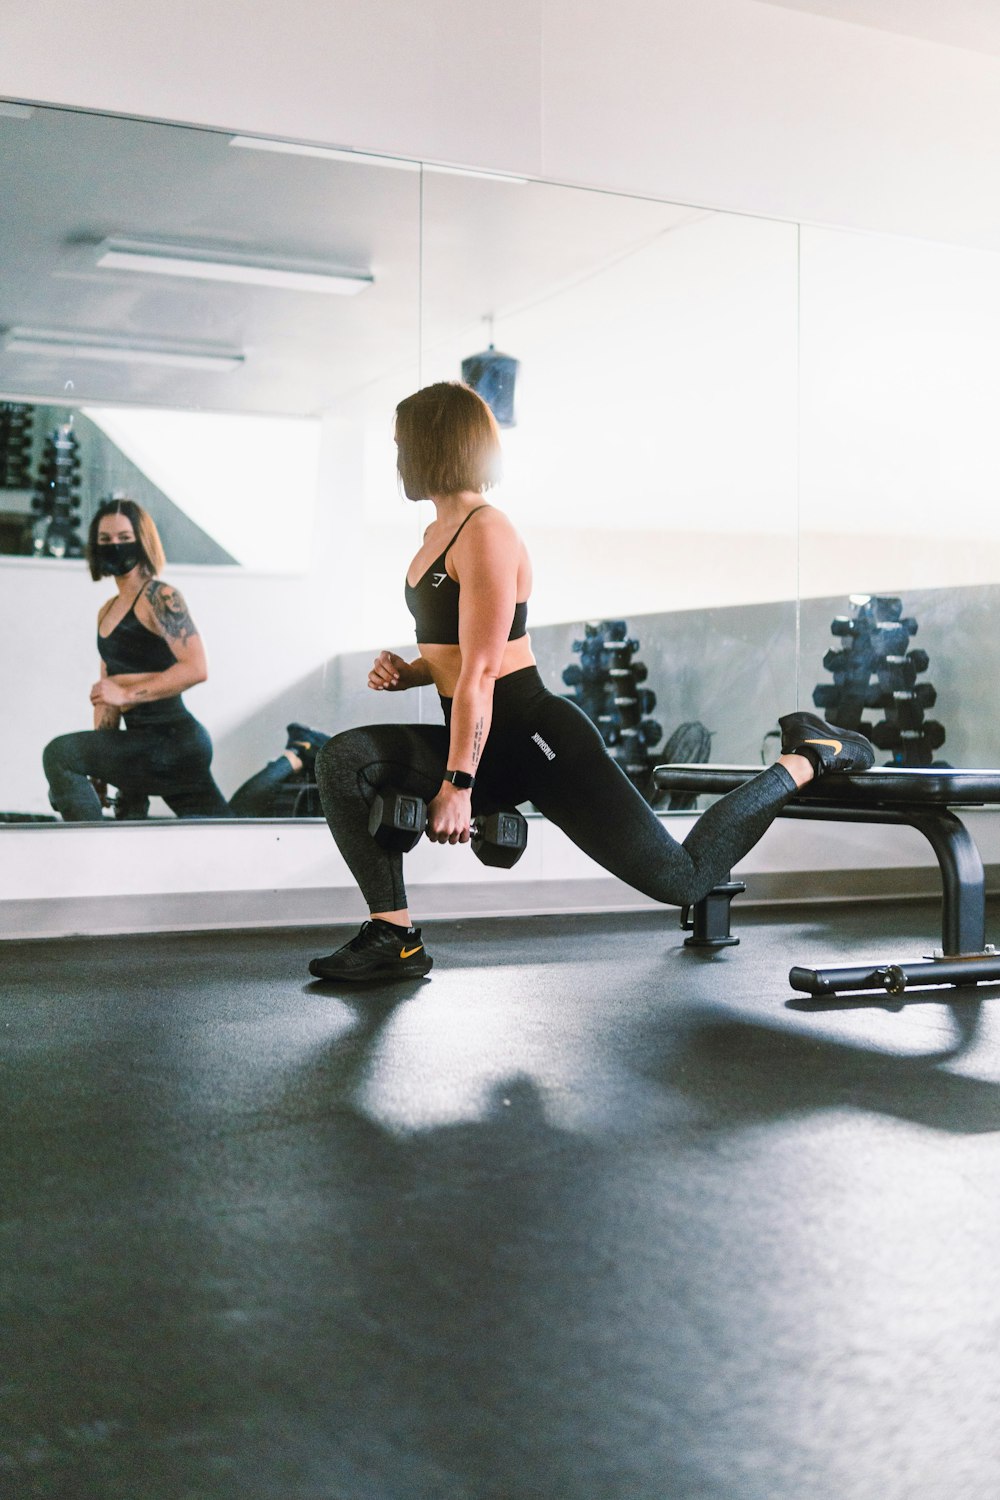 woman in black sports bra and black leggings doing exercise